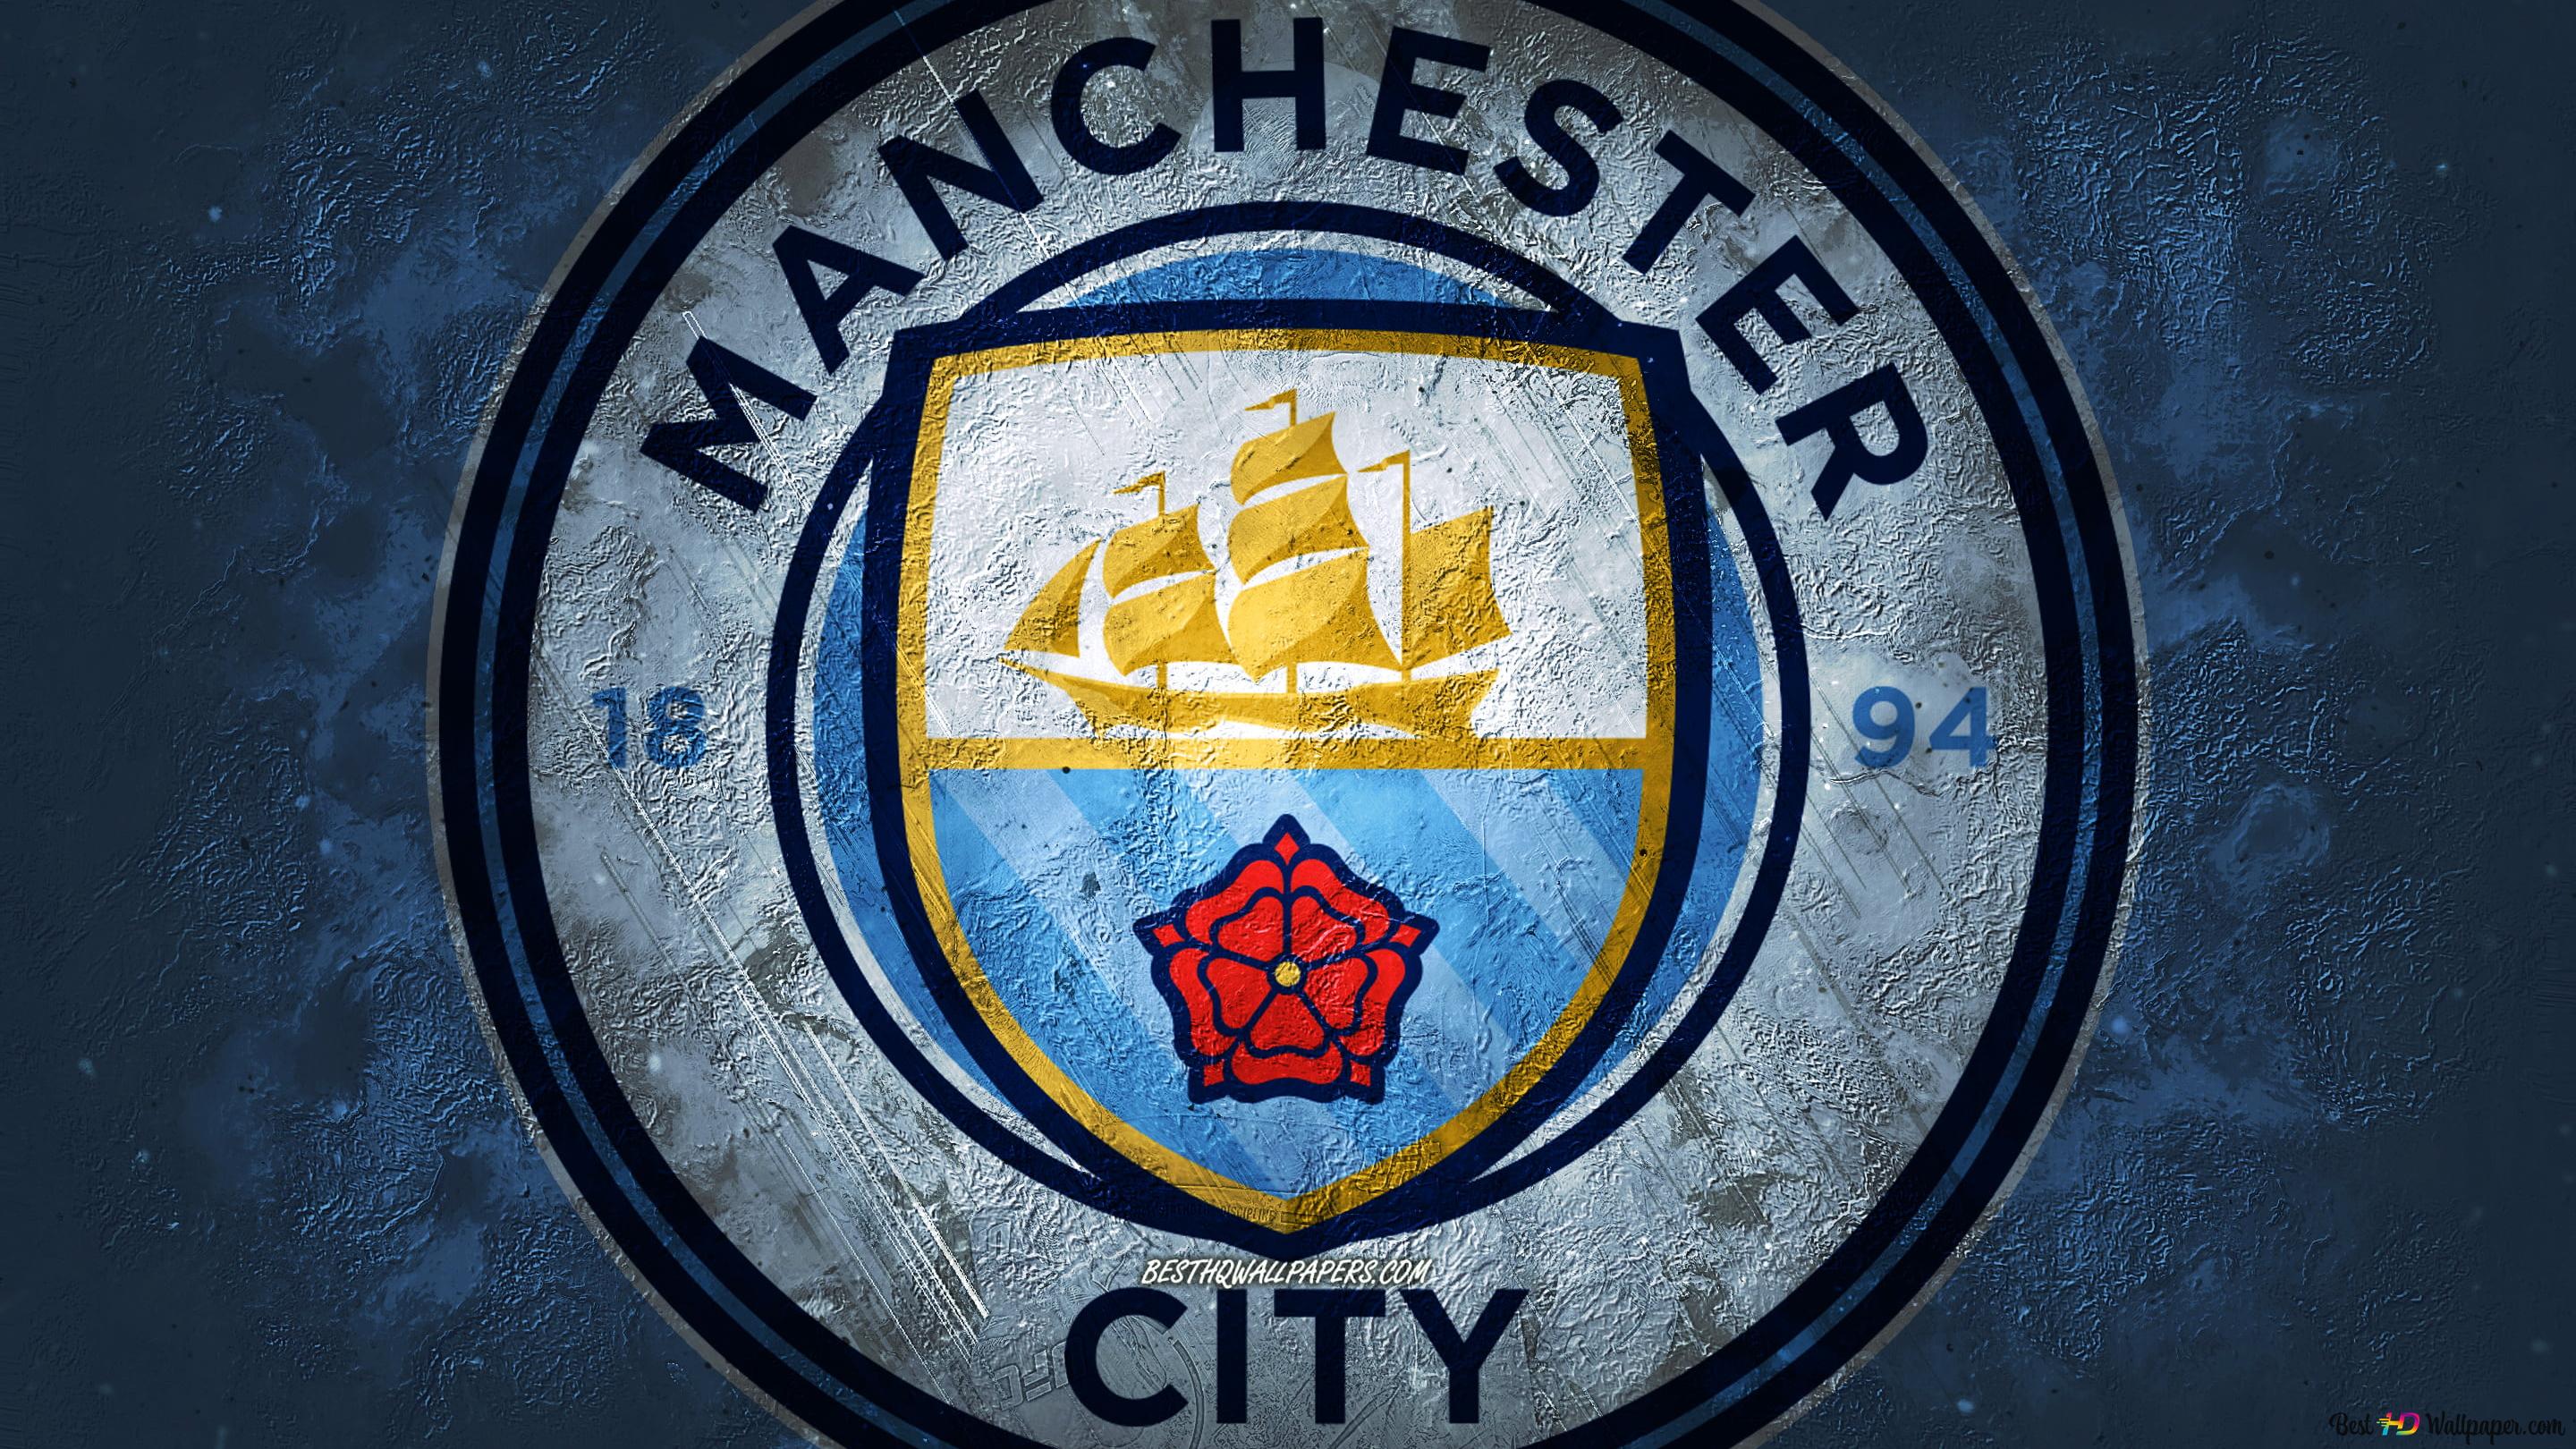 Premier league football club Manchester City FC logo 2K wallpaper download